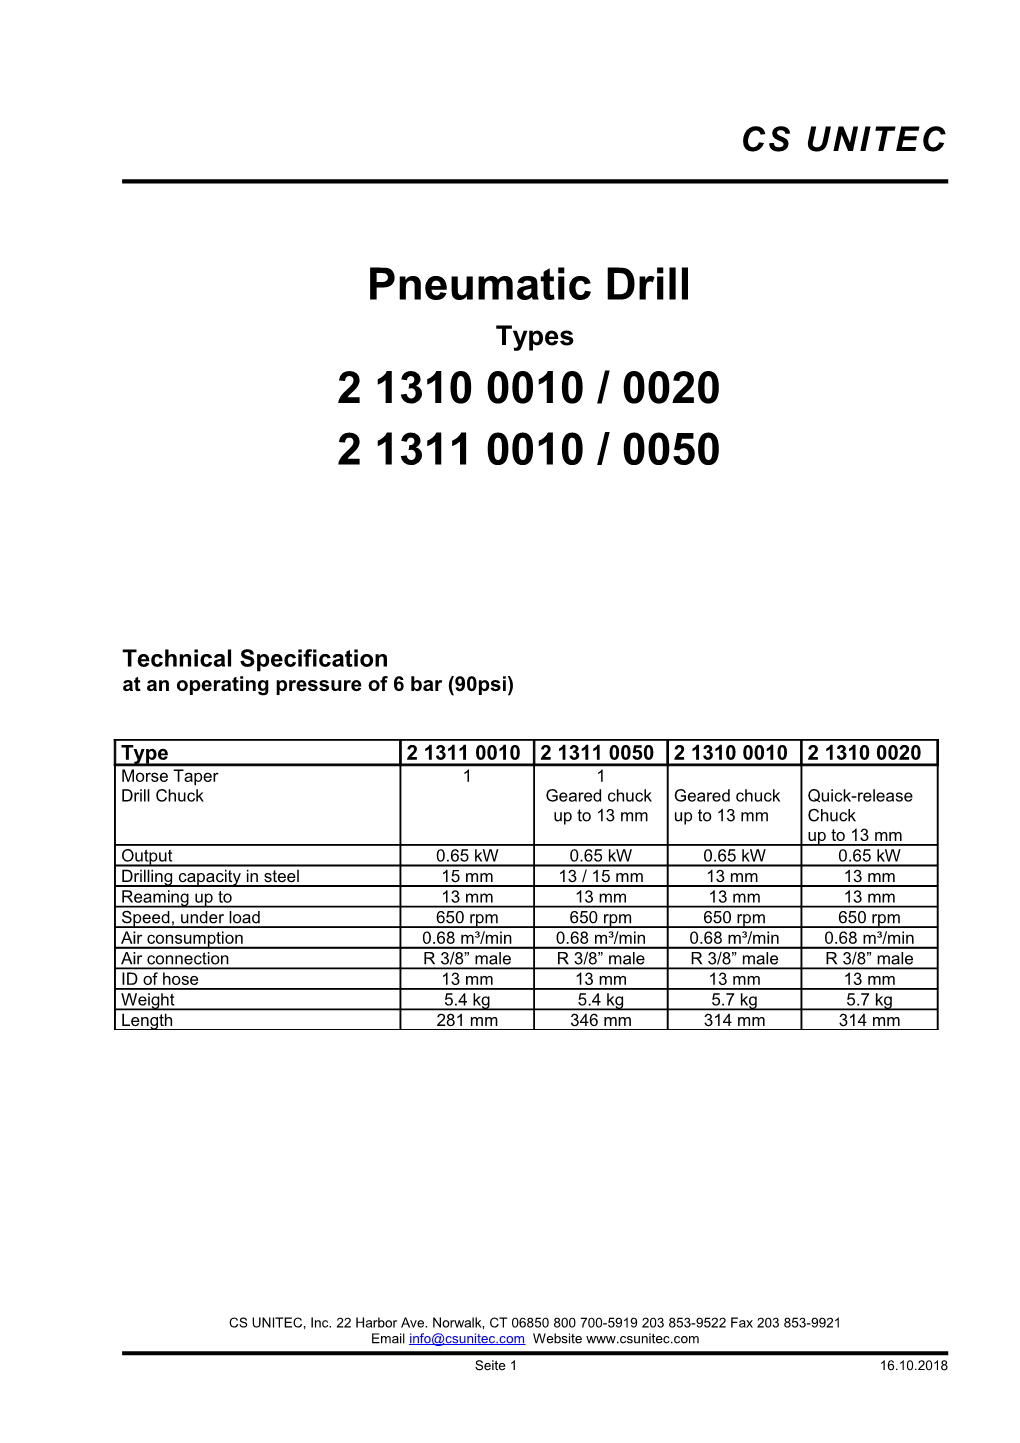 Pneumatic Drill